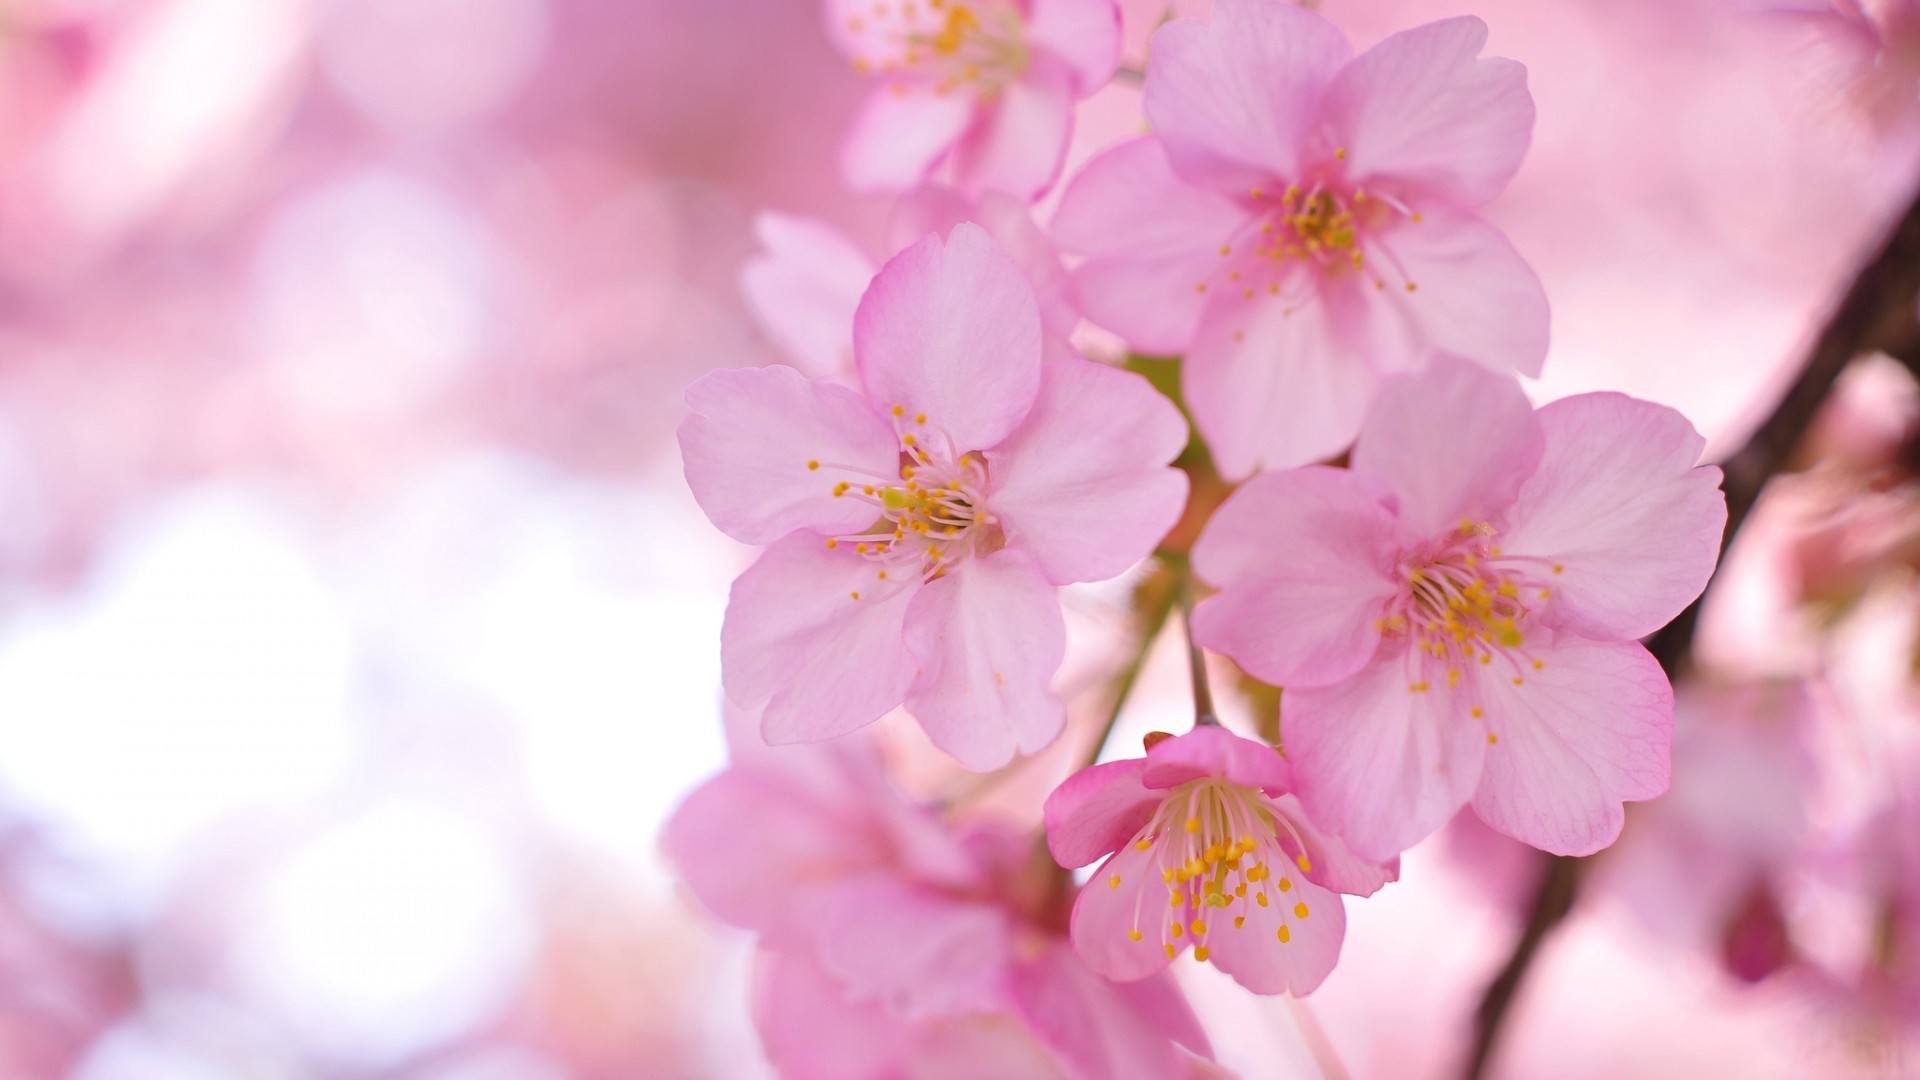 Flowers: Spring Sakura Flowers Nature Blurring Pink Flower Nice ...